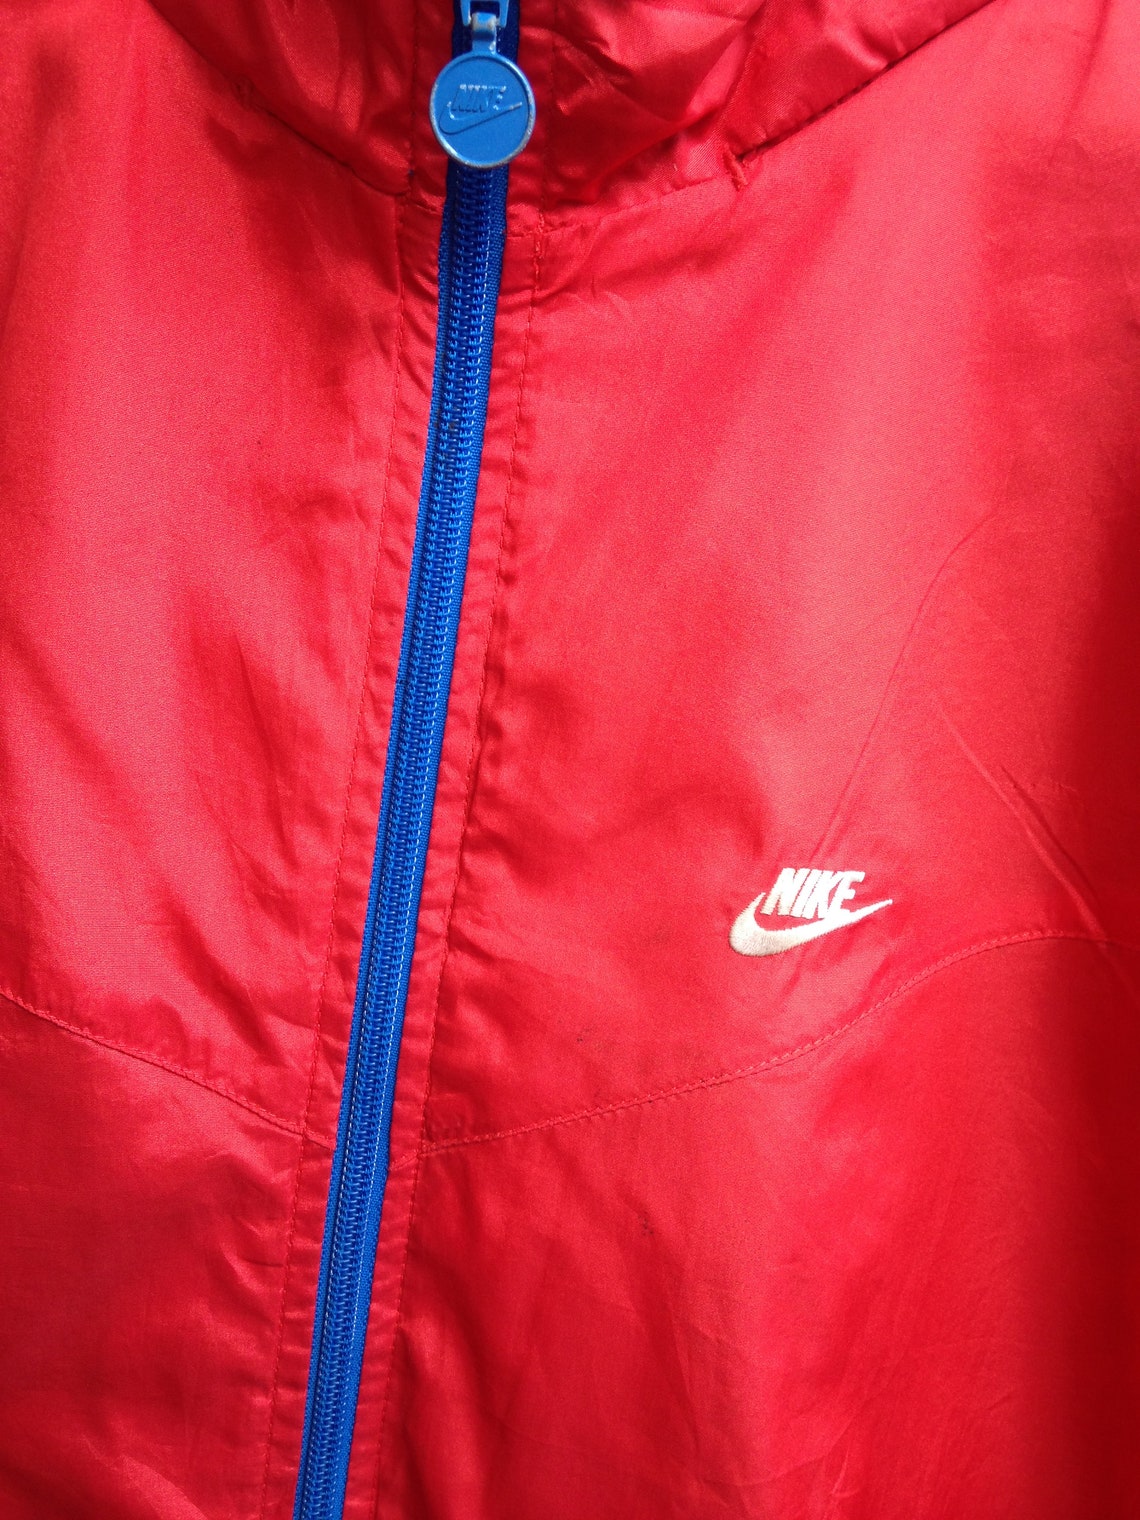 Nike Big Swoosh Logo Windbreaker Red Blue Full Zip Up Hood | Etsy